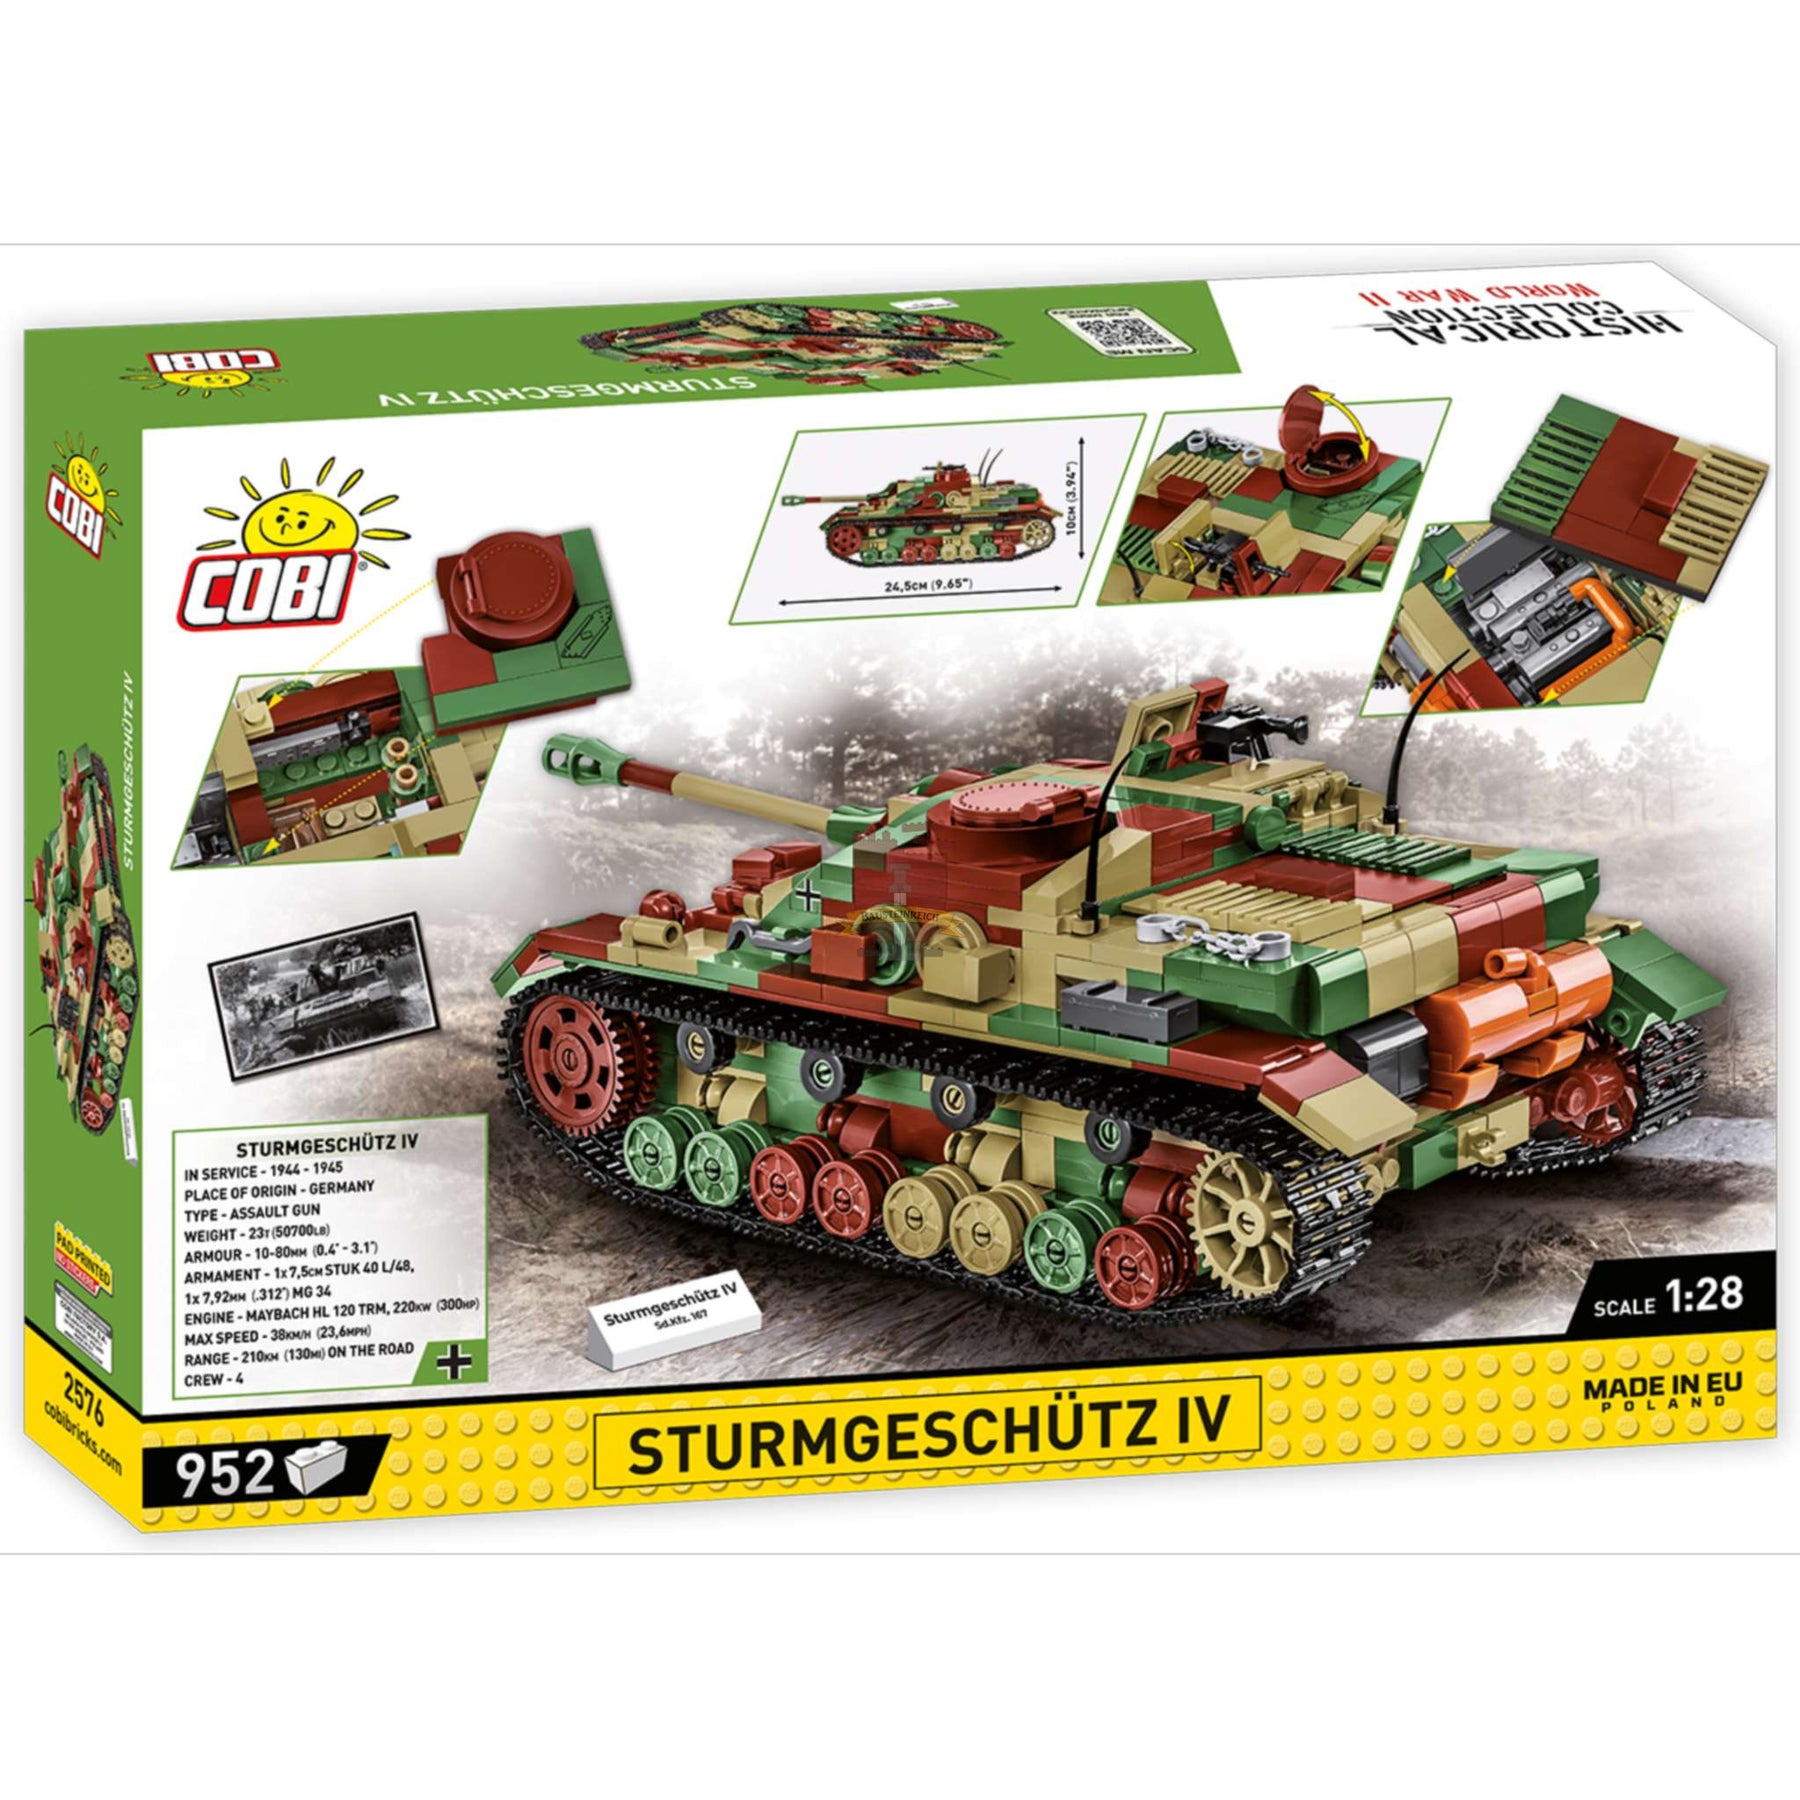 2576-Sturmgeschütz IV (Cobi)